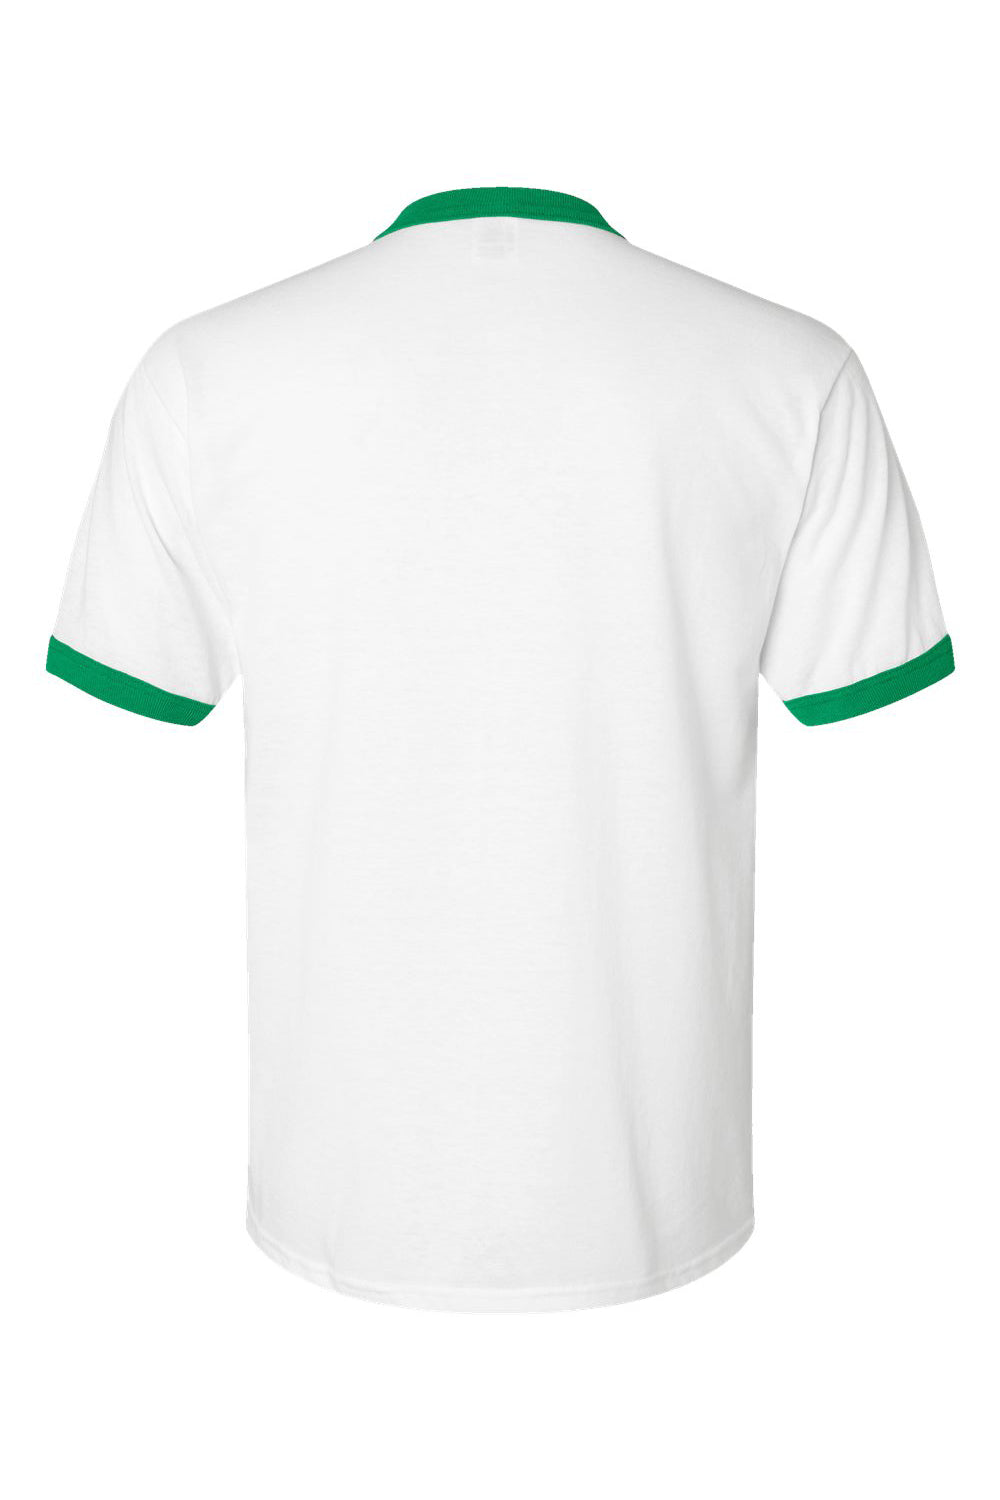 Augusta Sportswear 710 Mens Ringer Short Sleeve Crewneck T-Shirt White/Kelly Green Flat Back